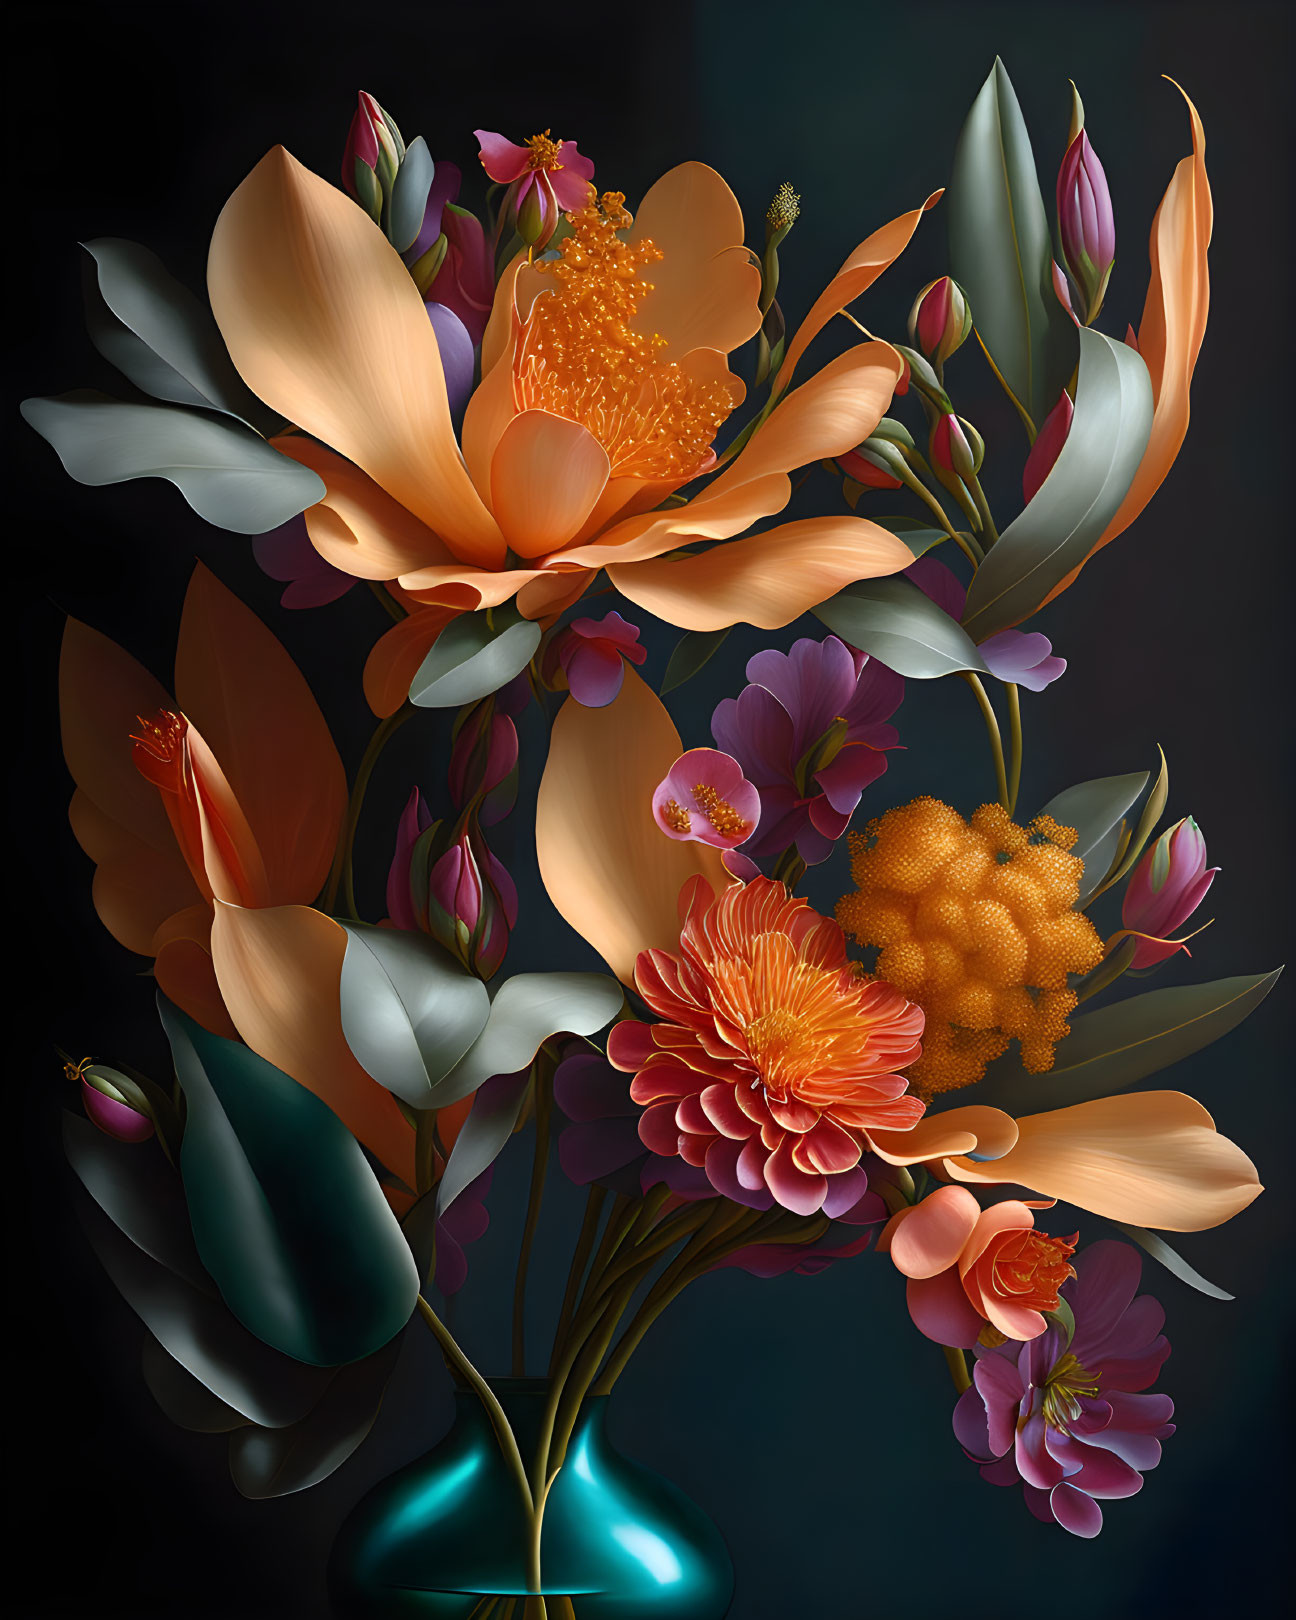 Colorful Flower Bouquet Art in Warm Tones on Dark Background